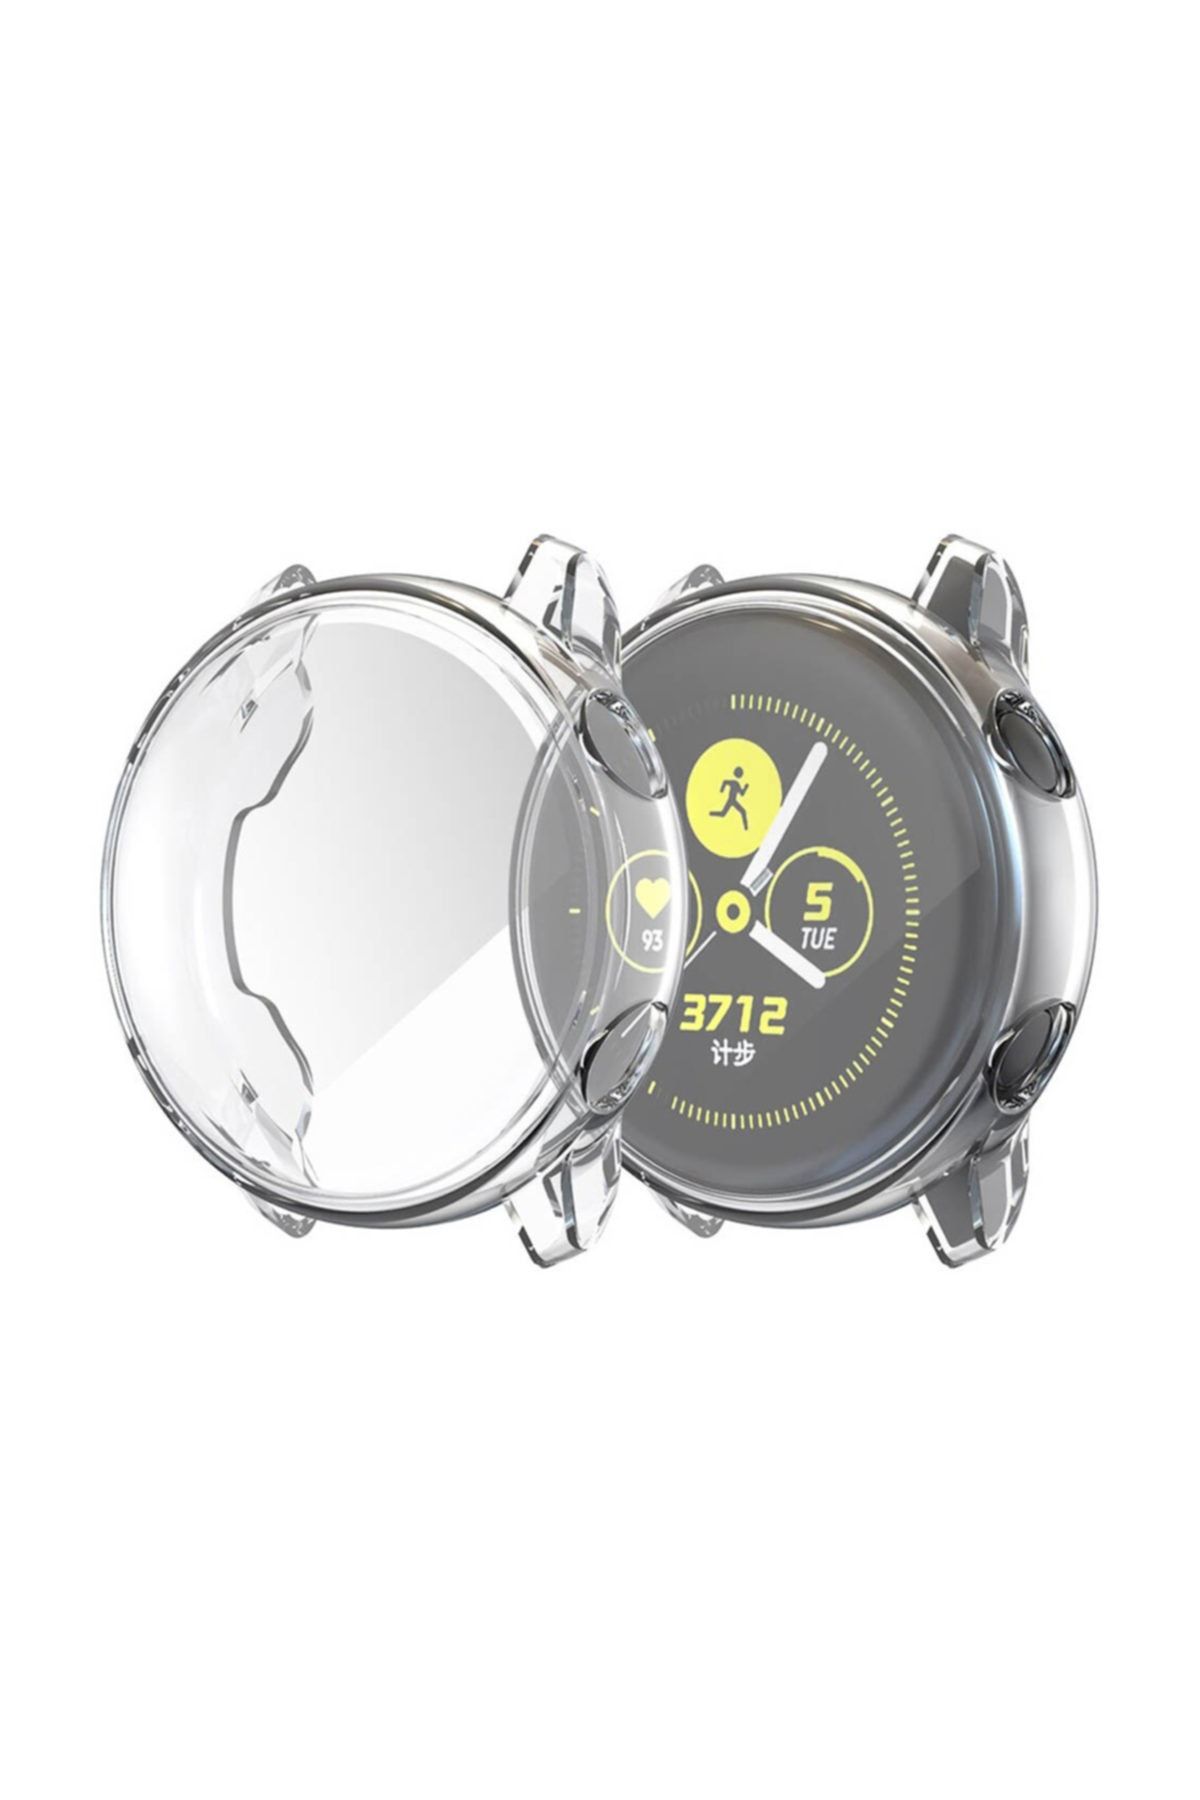 Microcase Samsung Galaxy Watch Active R500 Önü Kapalı Tasarım Silikon Kılıf - Şeffaf